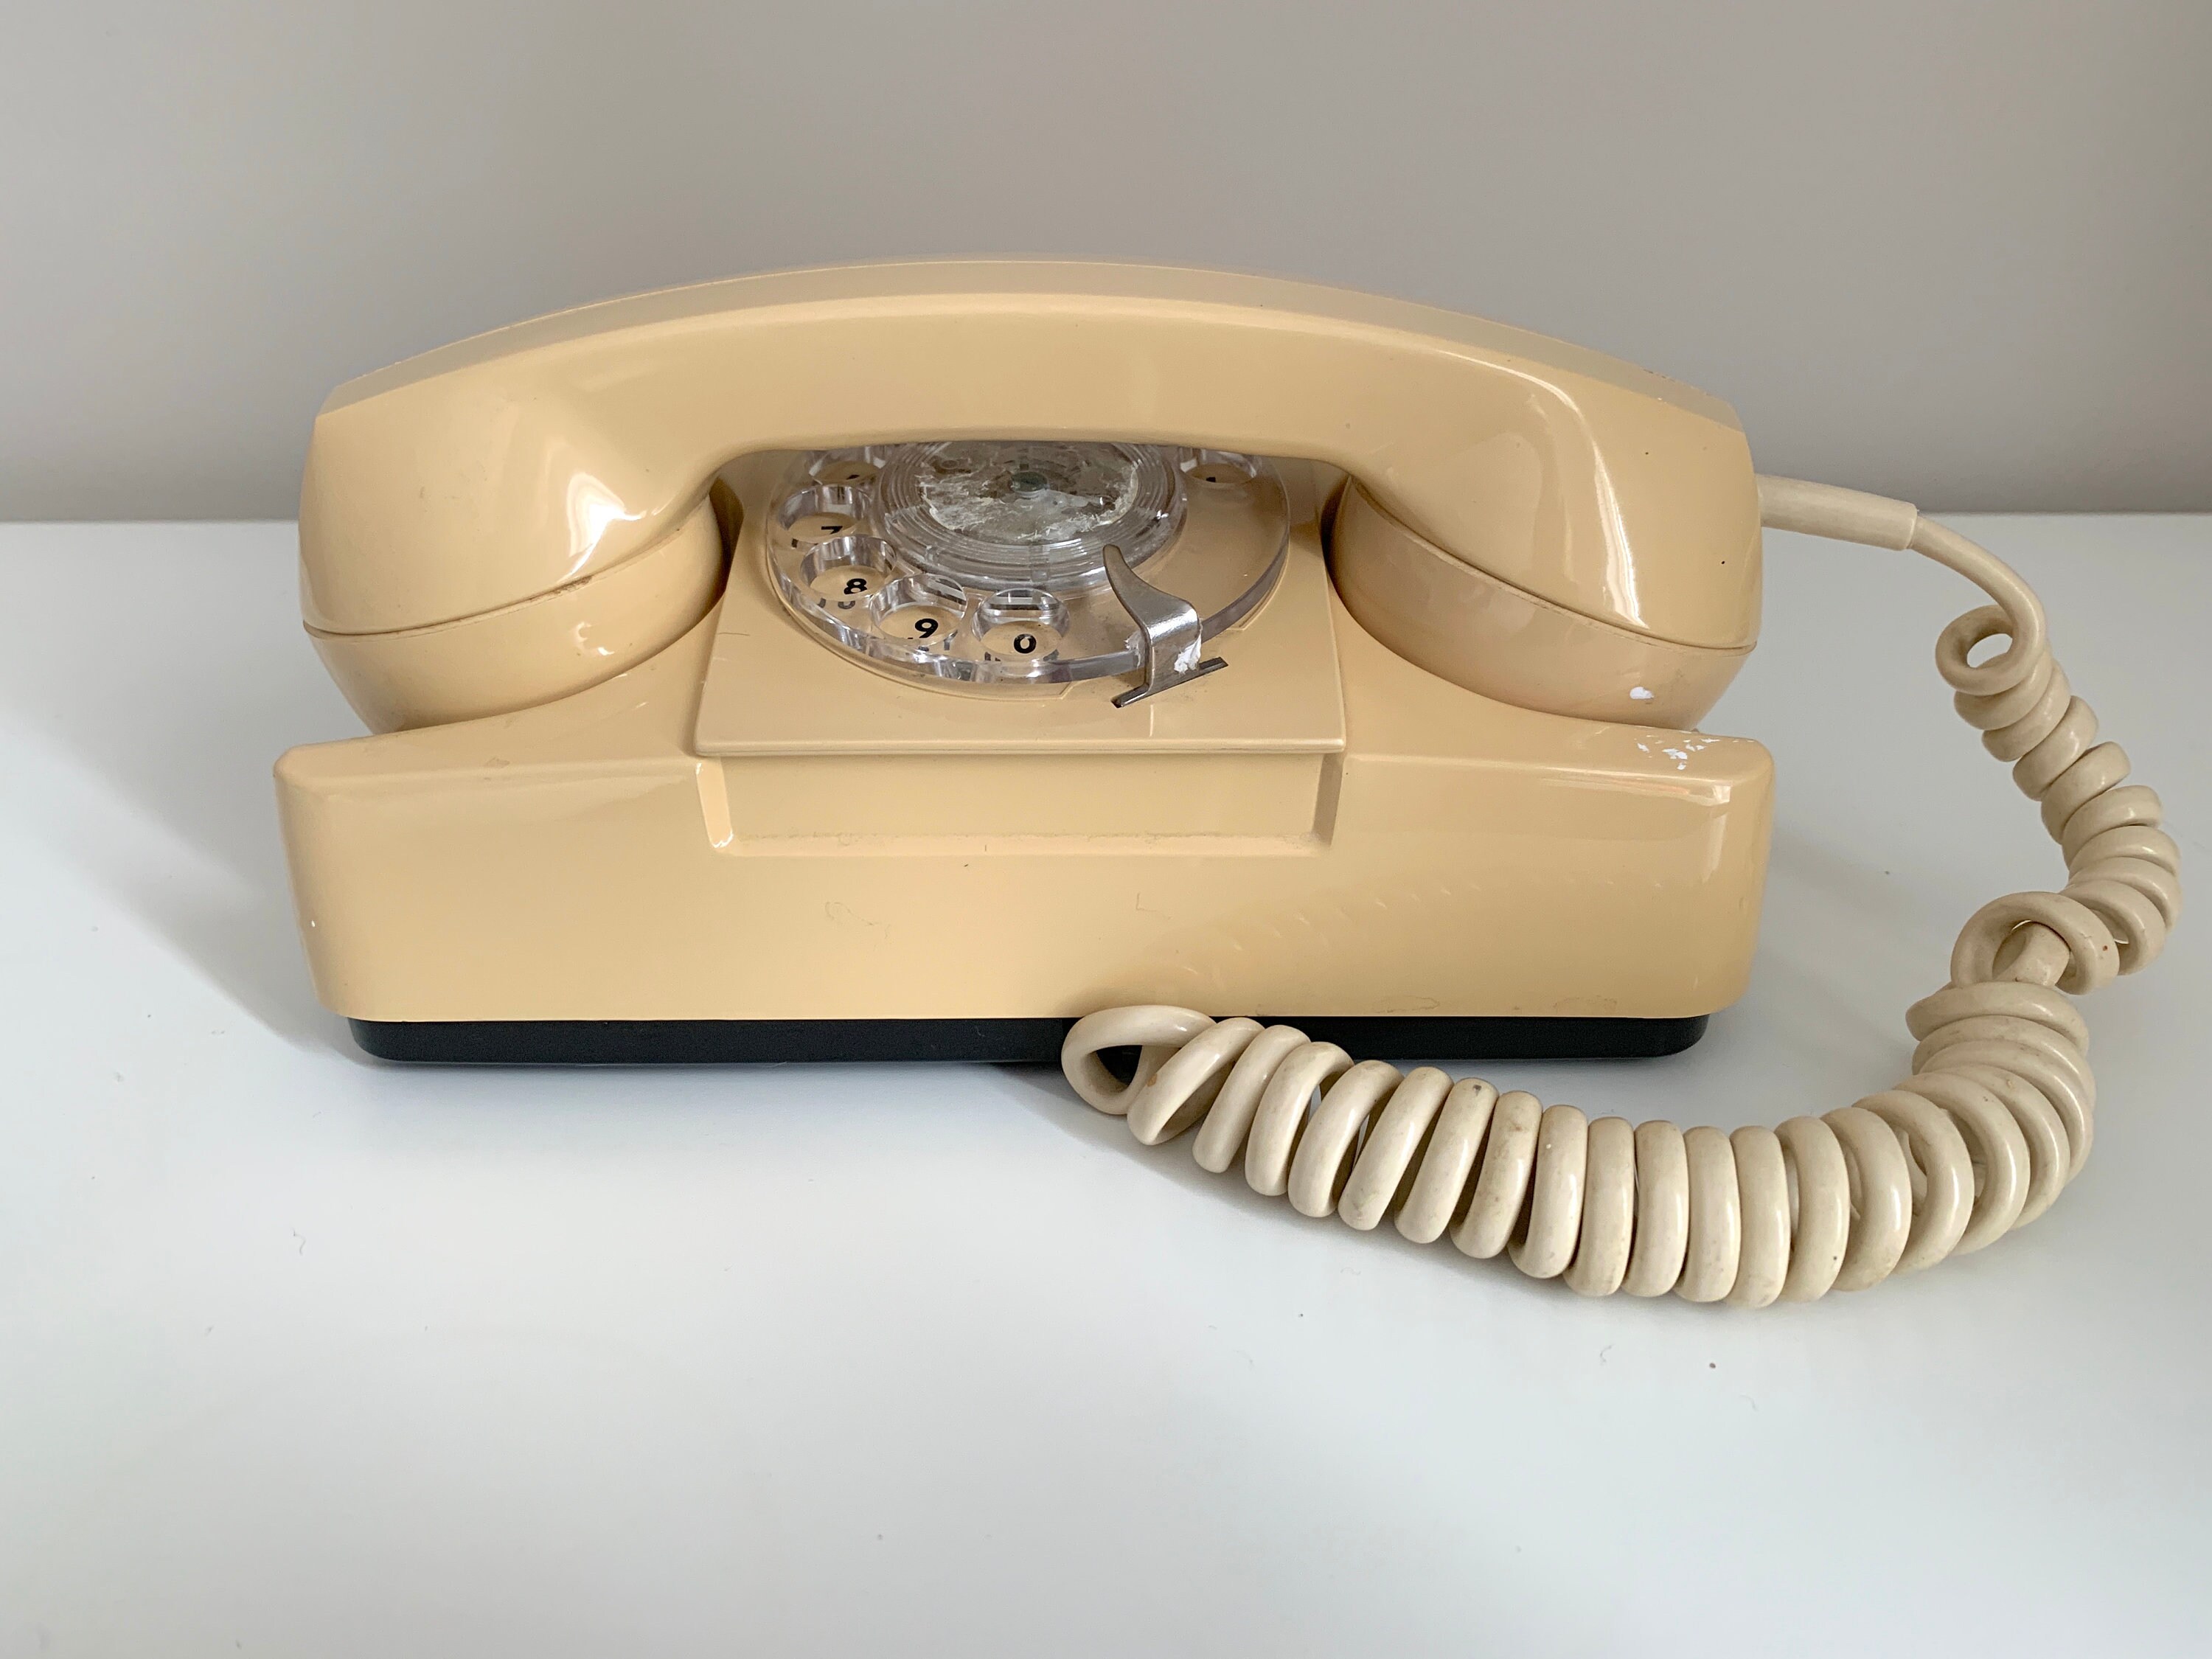 Vintage Rotary Dial Telephone C/M 500 1972 ITT Bell South Desktop Phone  Beige